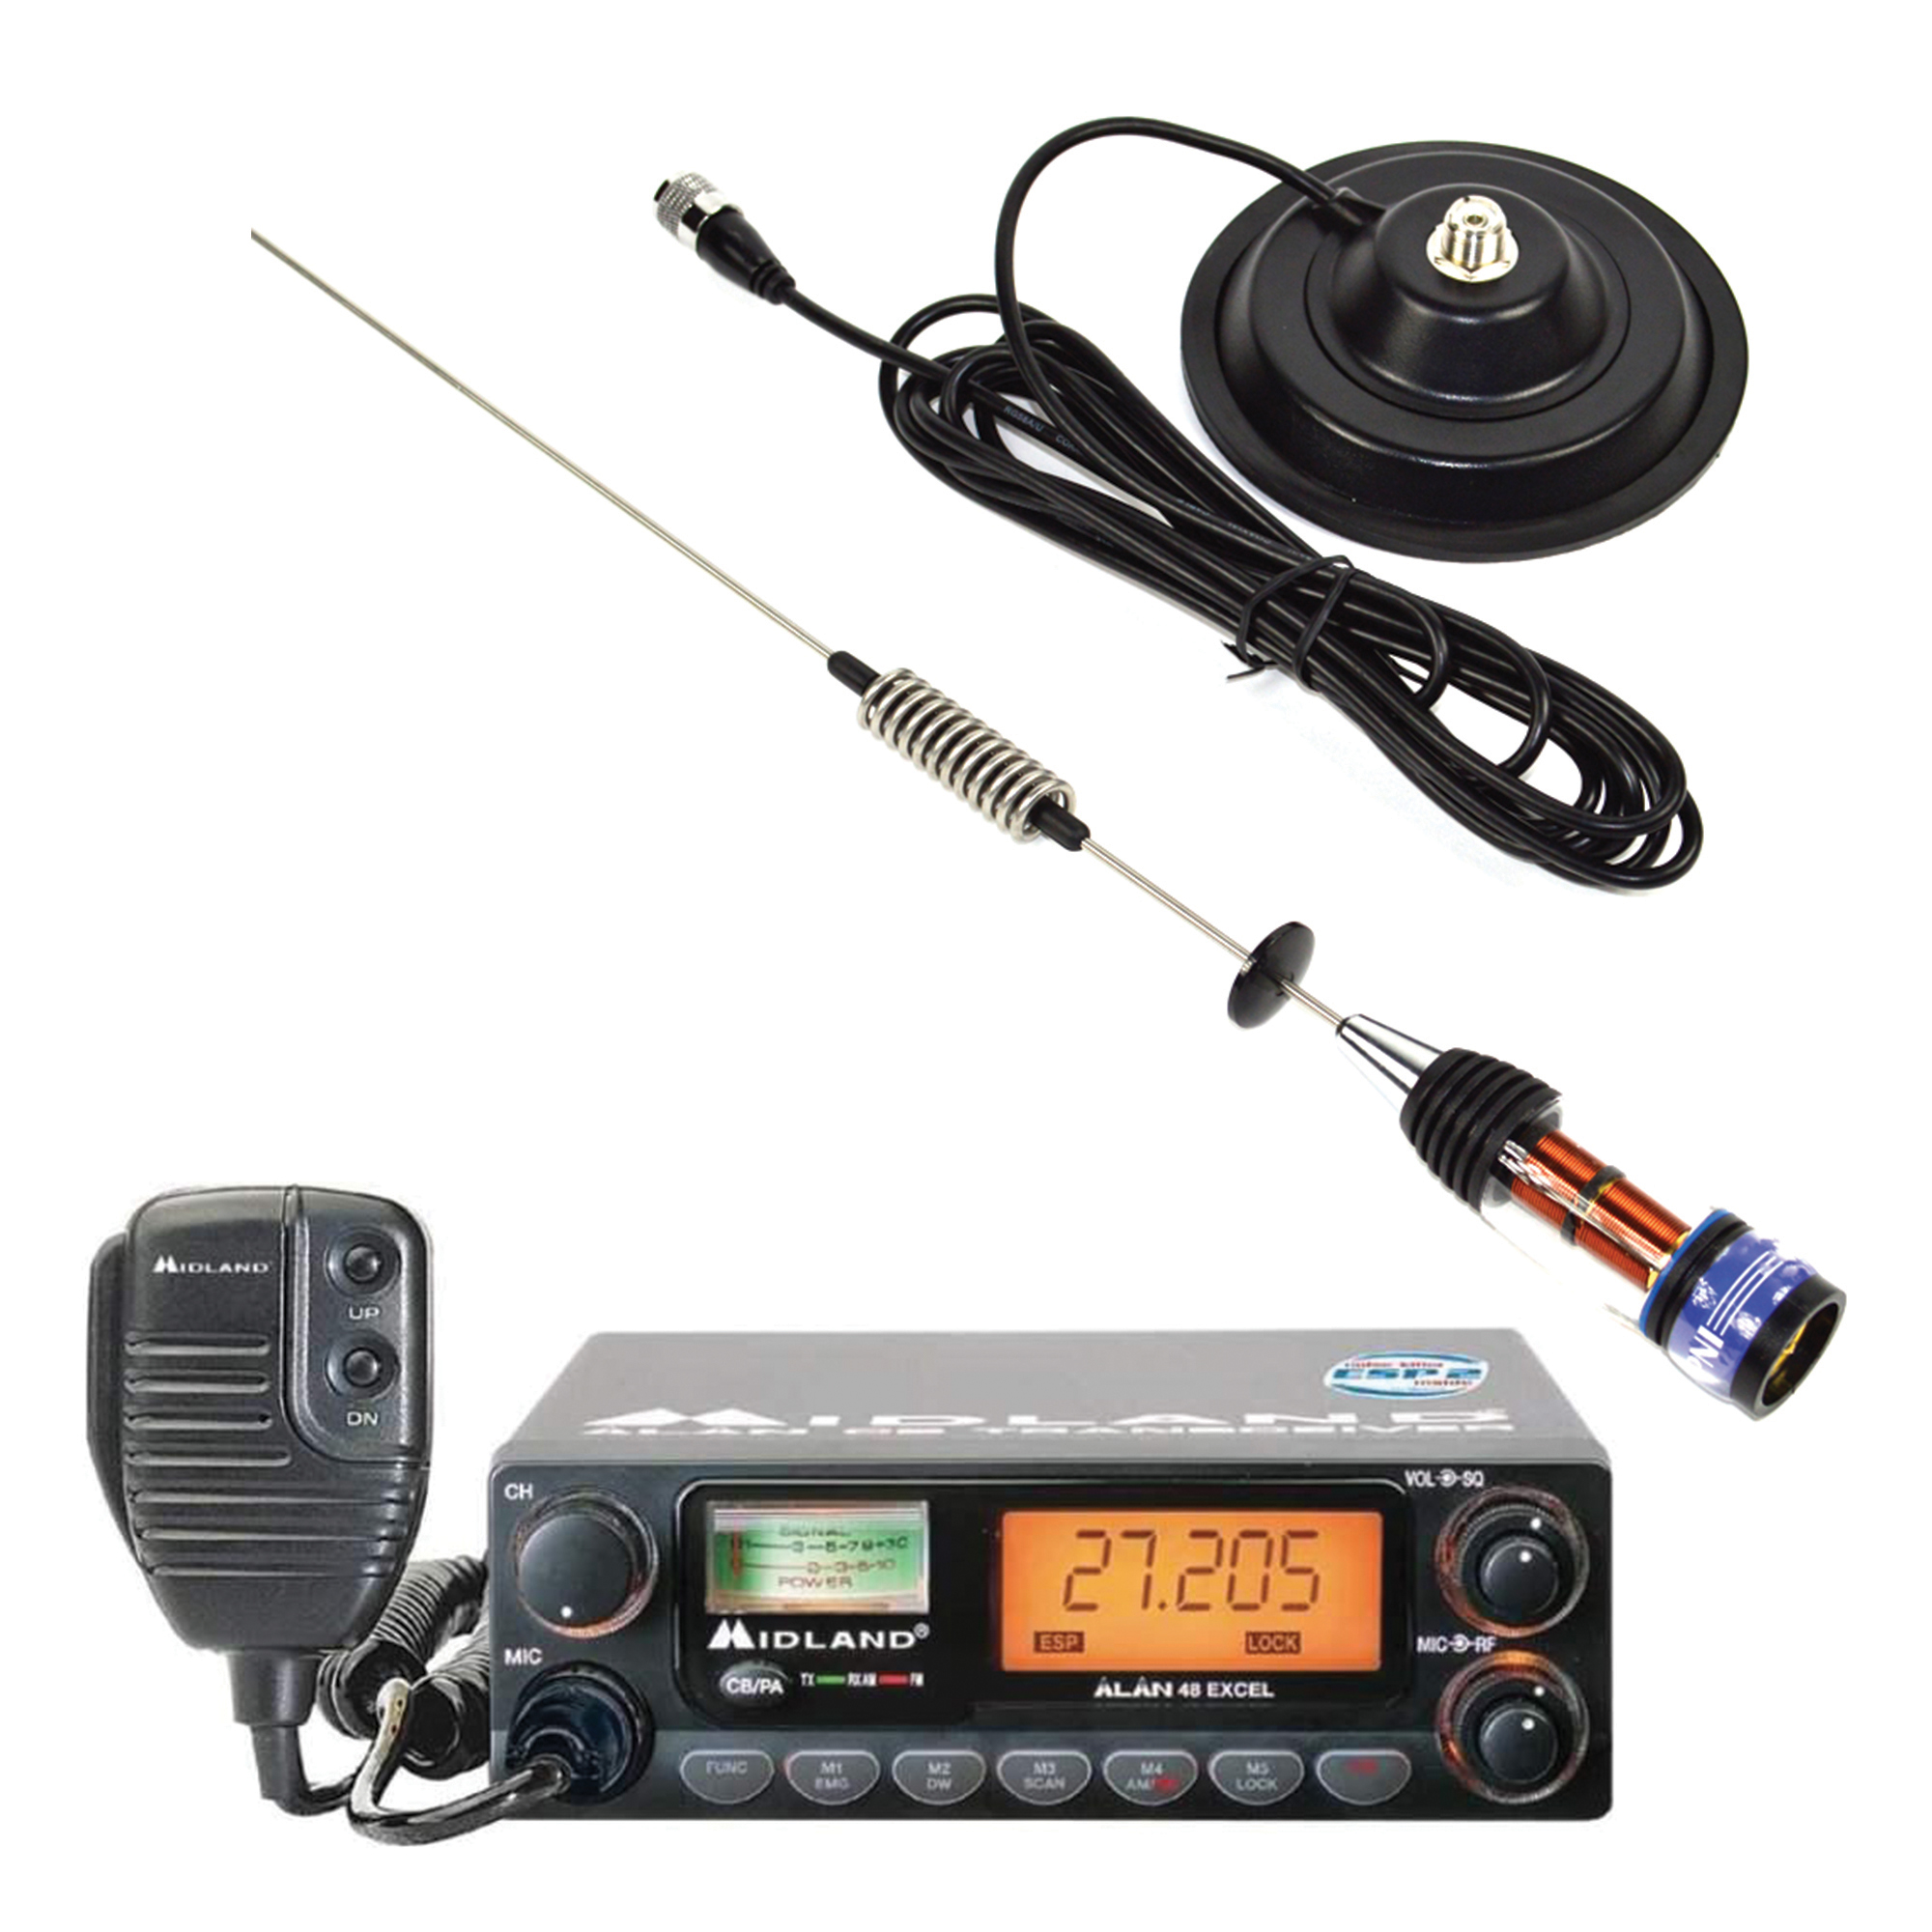 Kit Statie radio CB Midland Alan 48 Excel + Antena PNI ML70 cu magnet